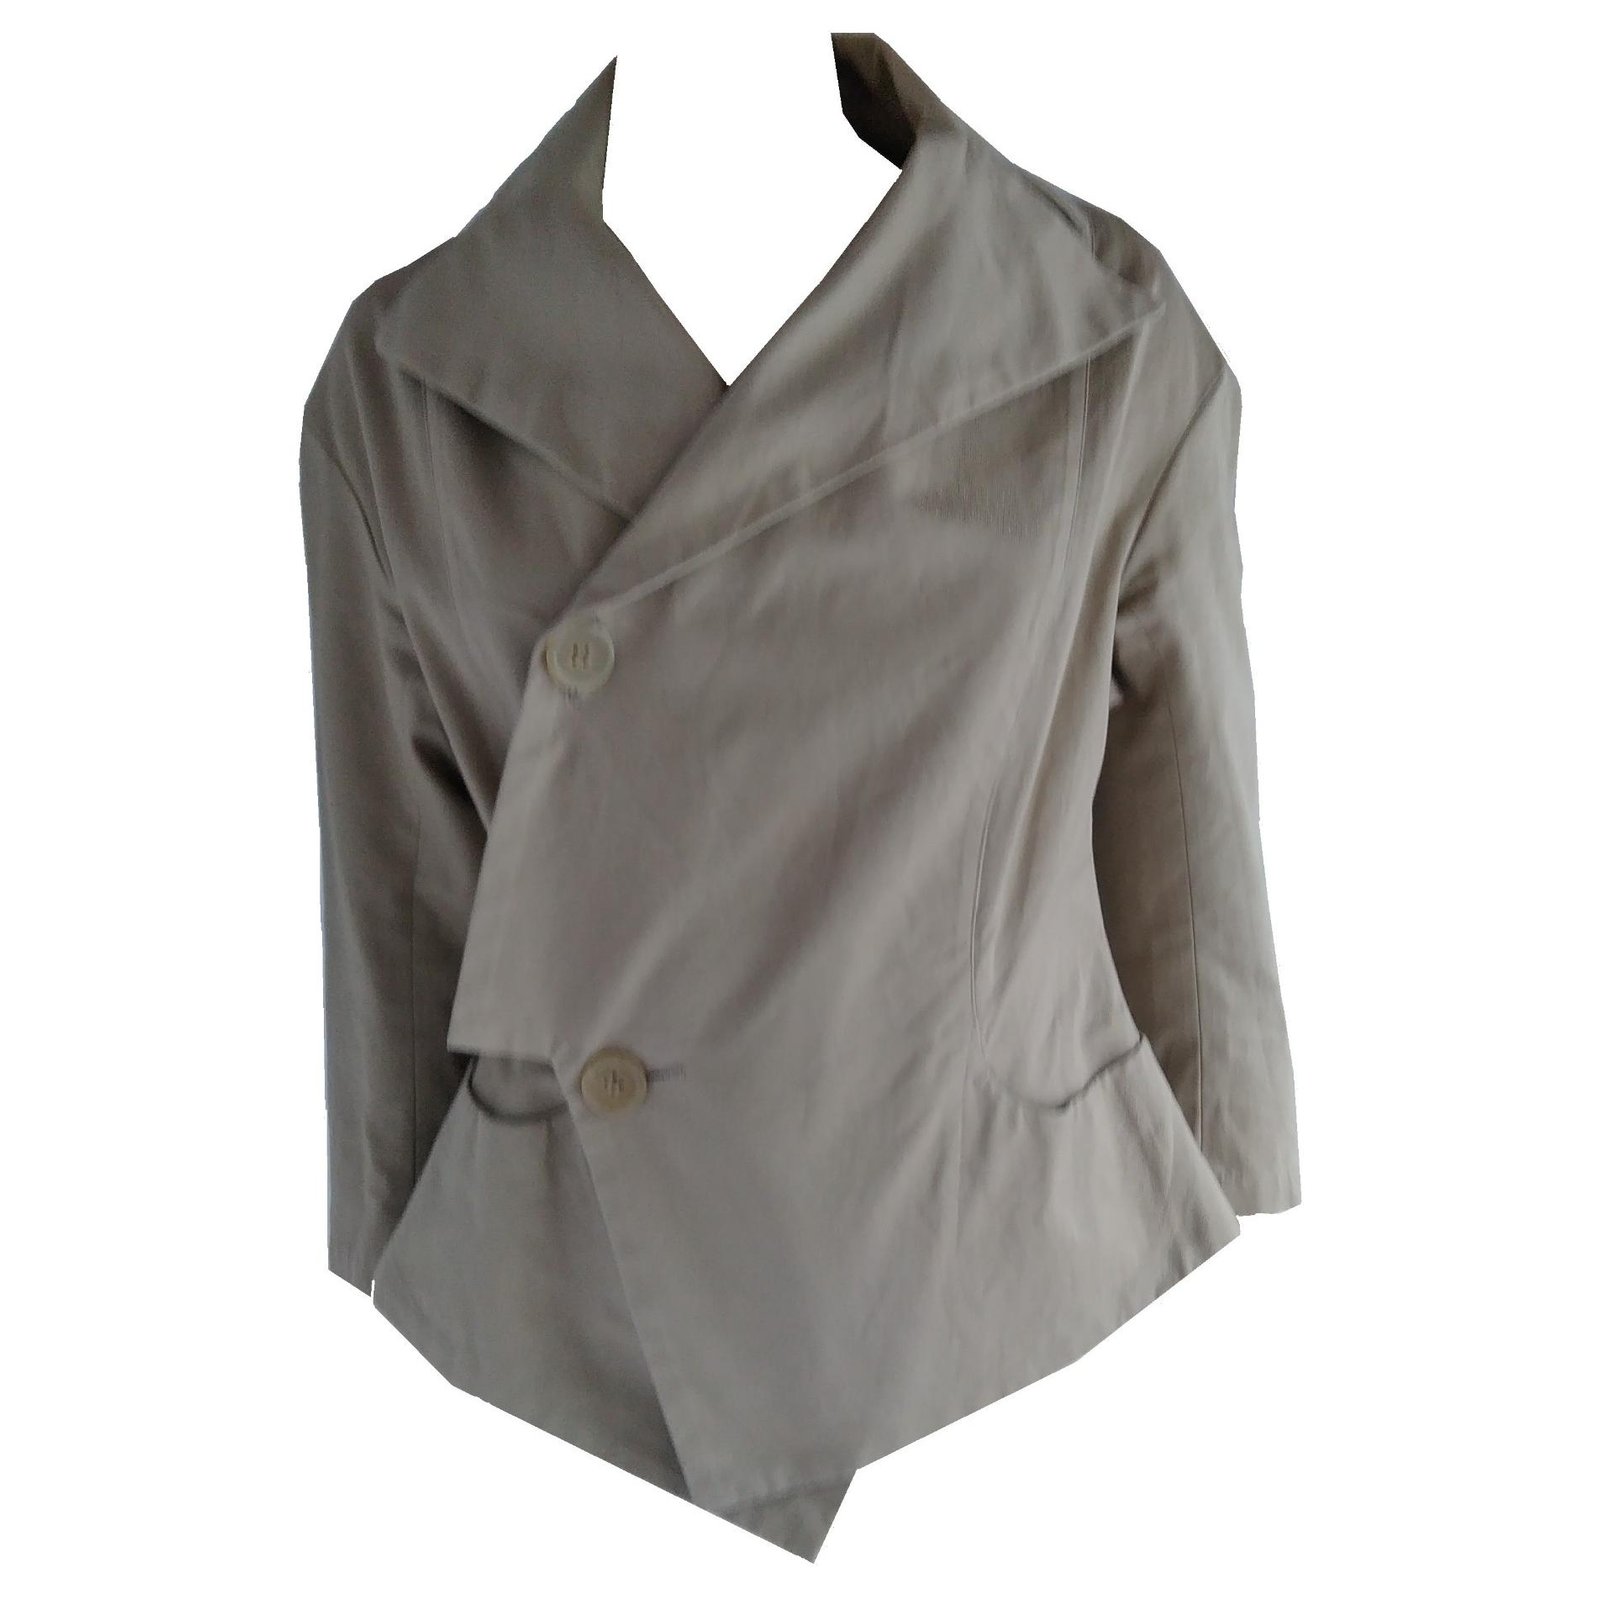 https://cdn1.jolicloset.com/imgr/full/2019/06/130916-1/beige-cotton-yohji-yamamoto-asymmetrical-jacket.jpg